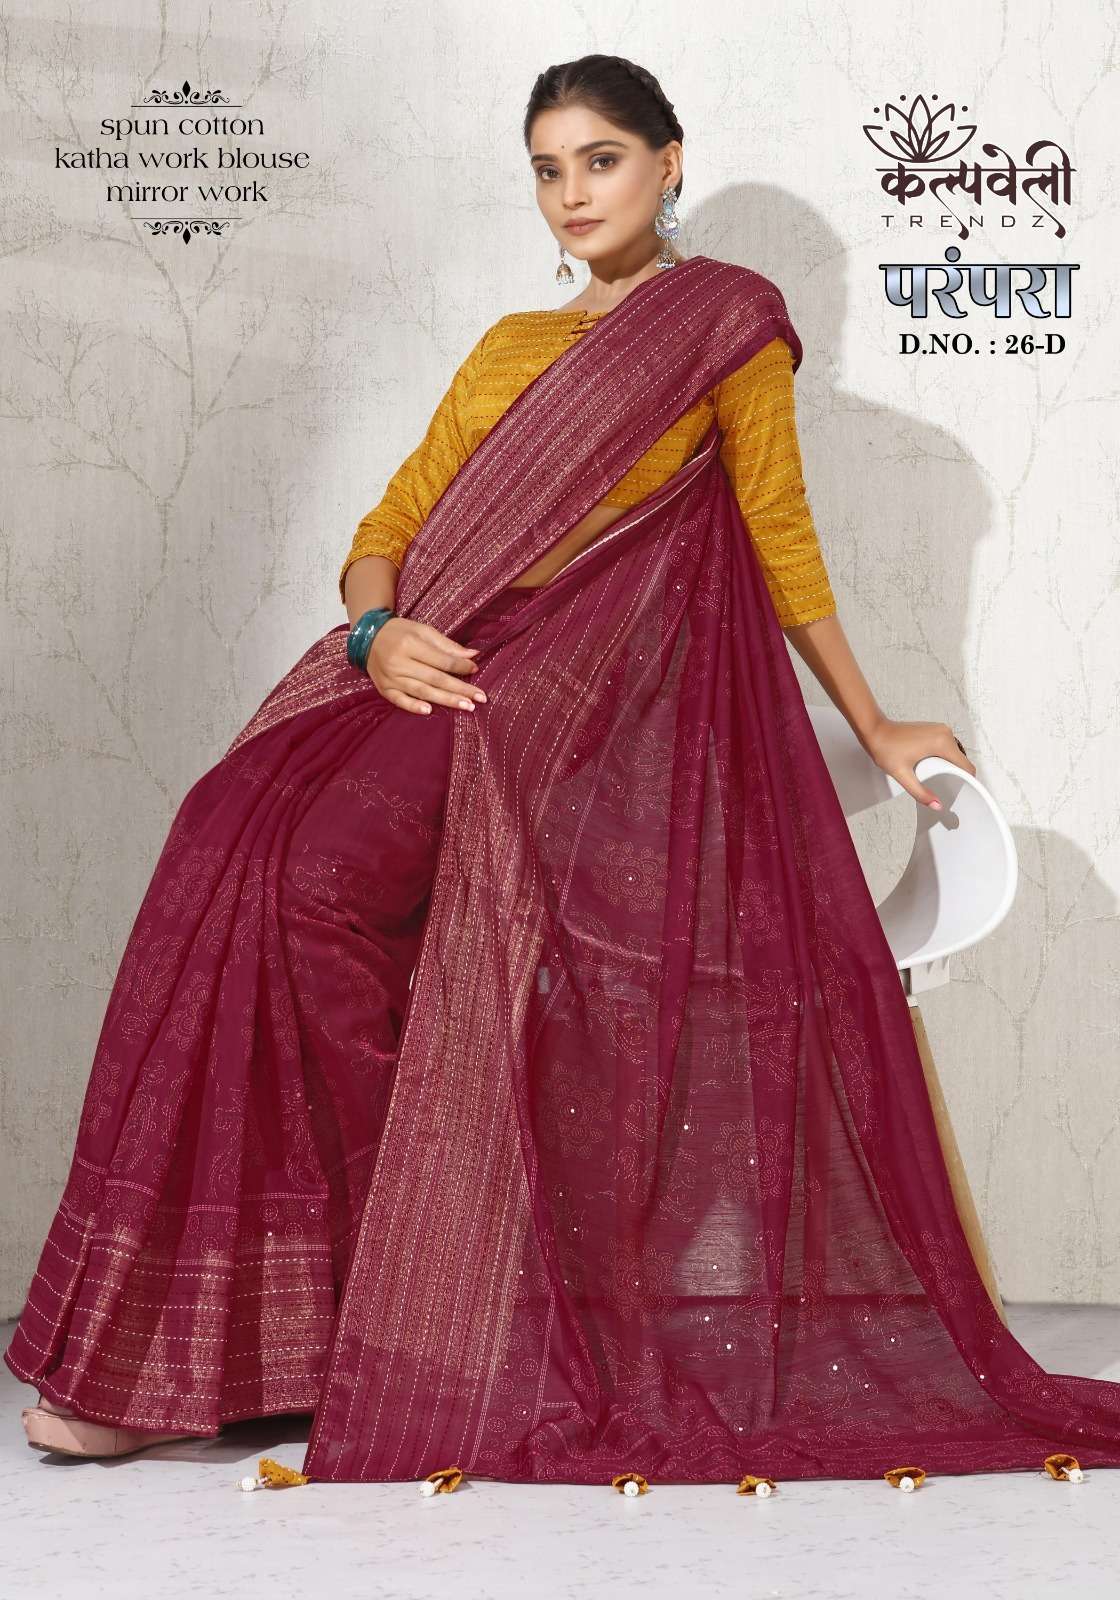 kalpavelly trendz parampara 26 fancy amazing work spun cotton saree collection